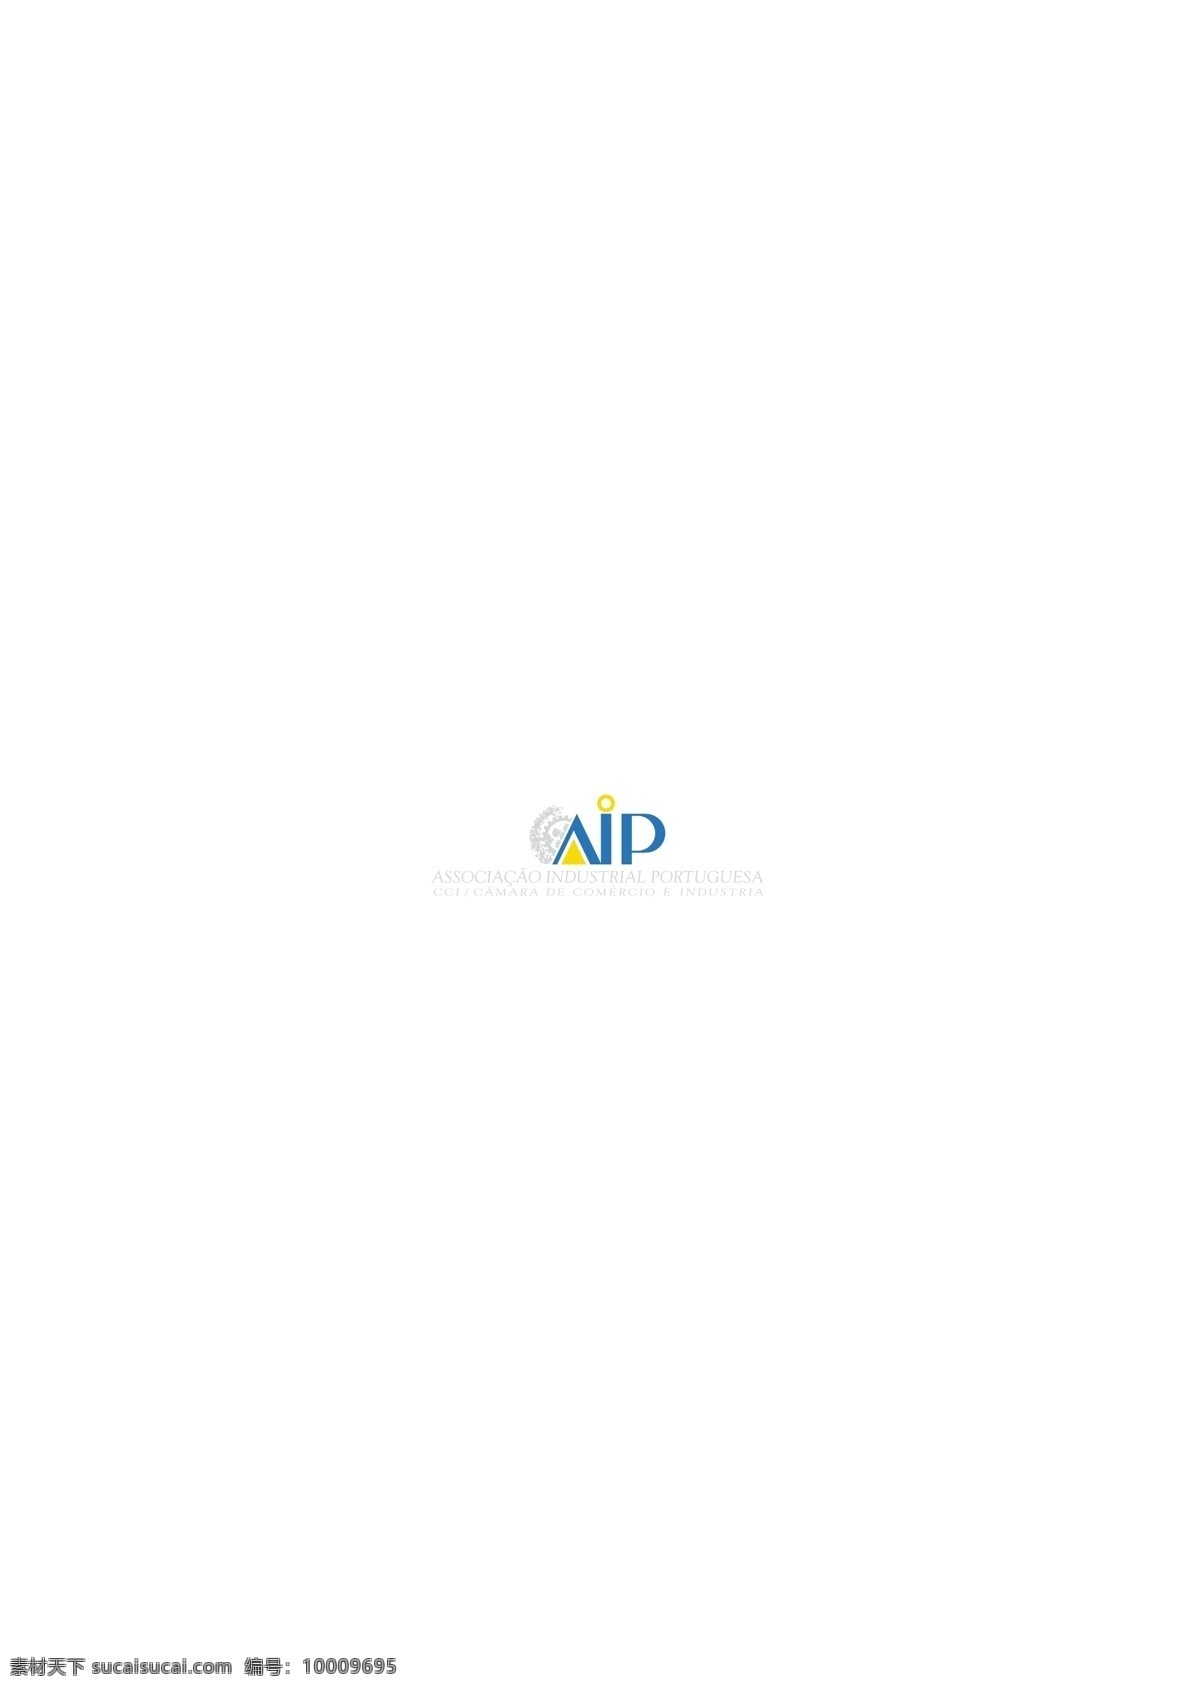 aip logo大全 logo 设计欣赏 商业矢量 矢量下载 工业 标志 标志设计 欣赏 网页矢量 矢量图 其他矢量图